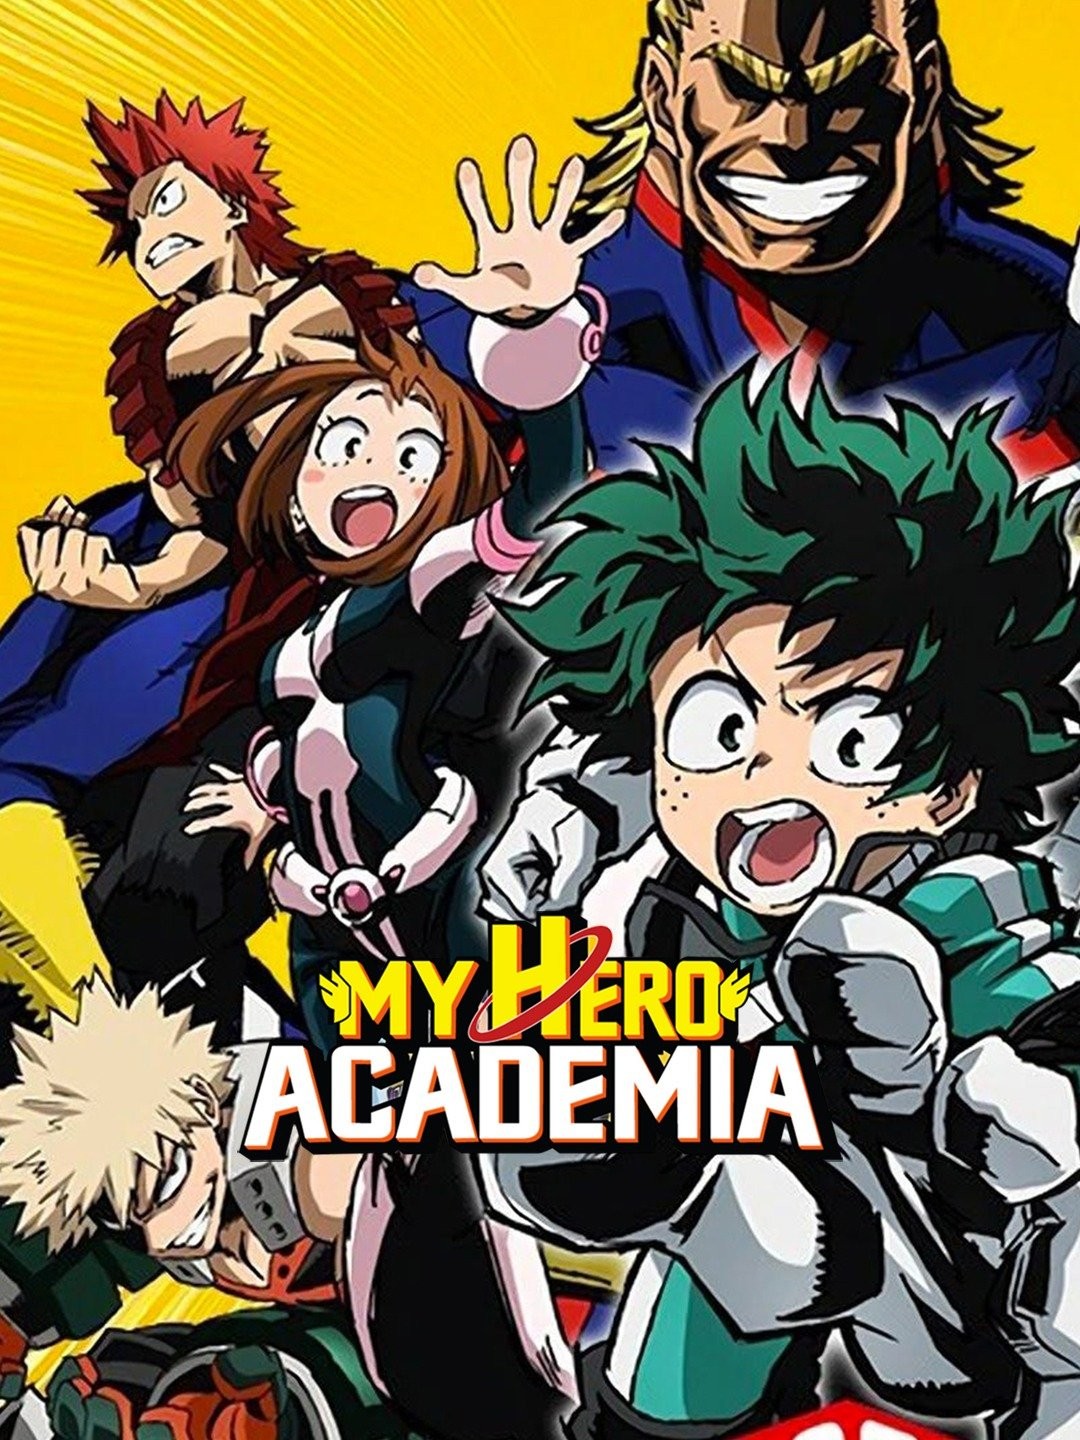 Watch the latest My Hero Academia Season 3 Episode 14 online